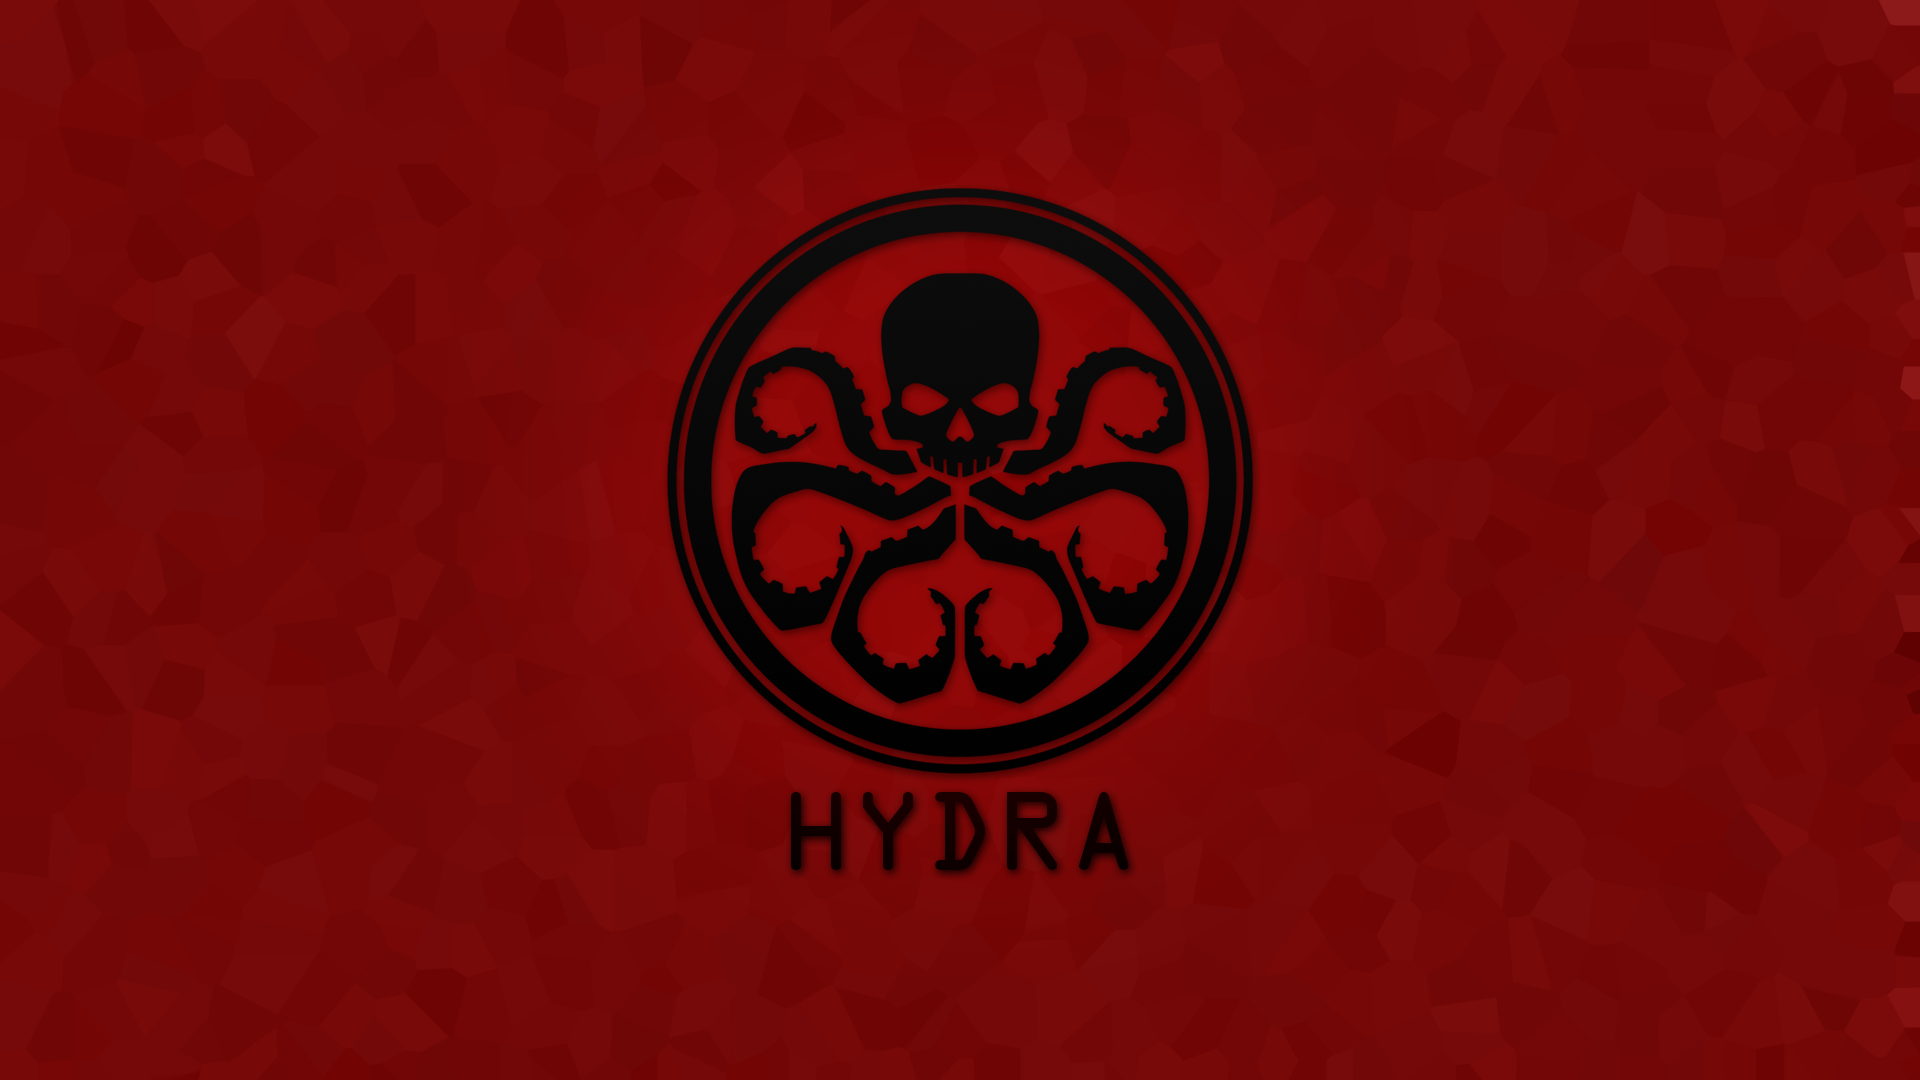 Wallpaper - Hydra by desous on DeviantArt